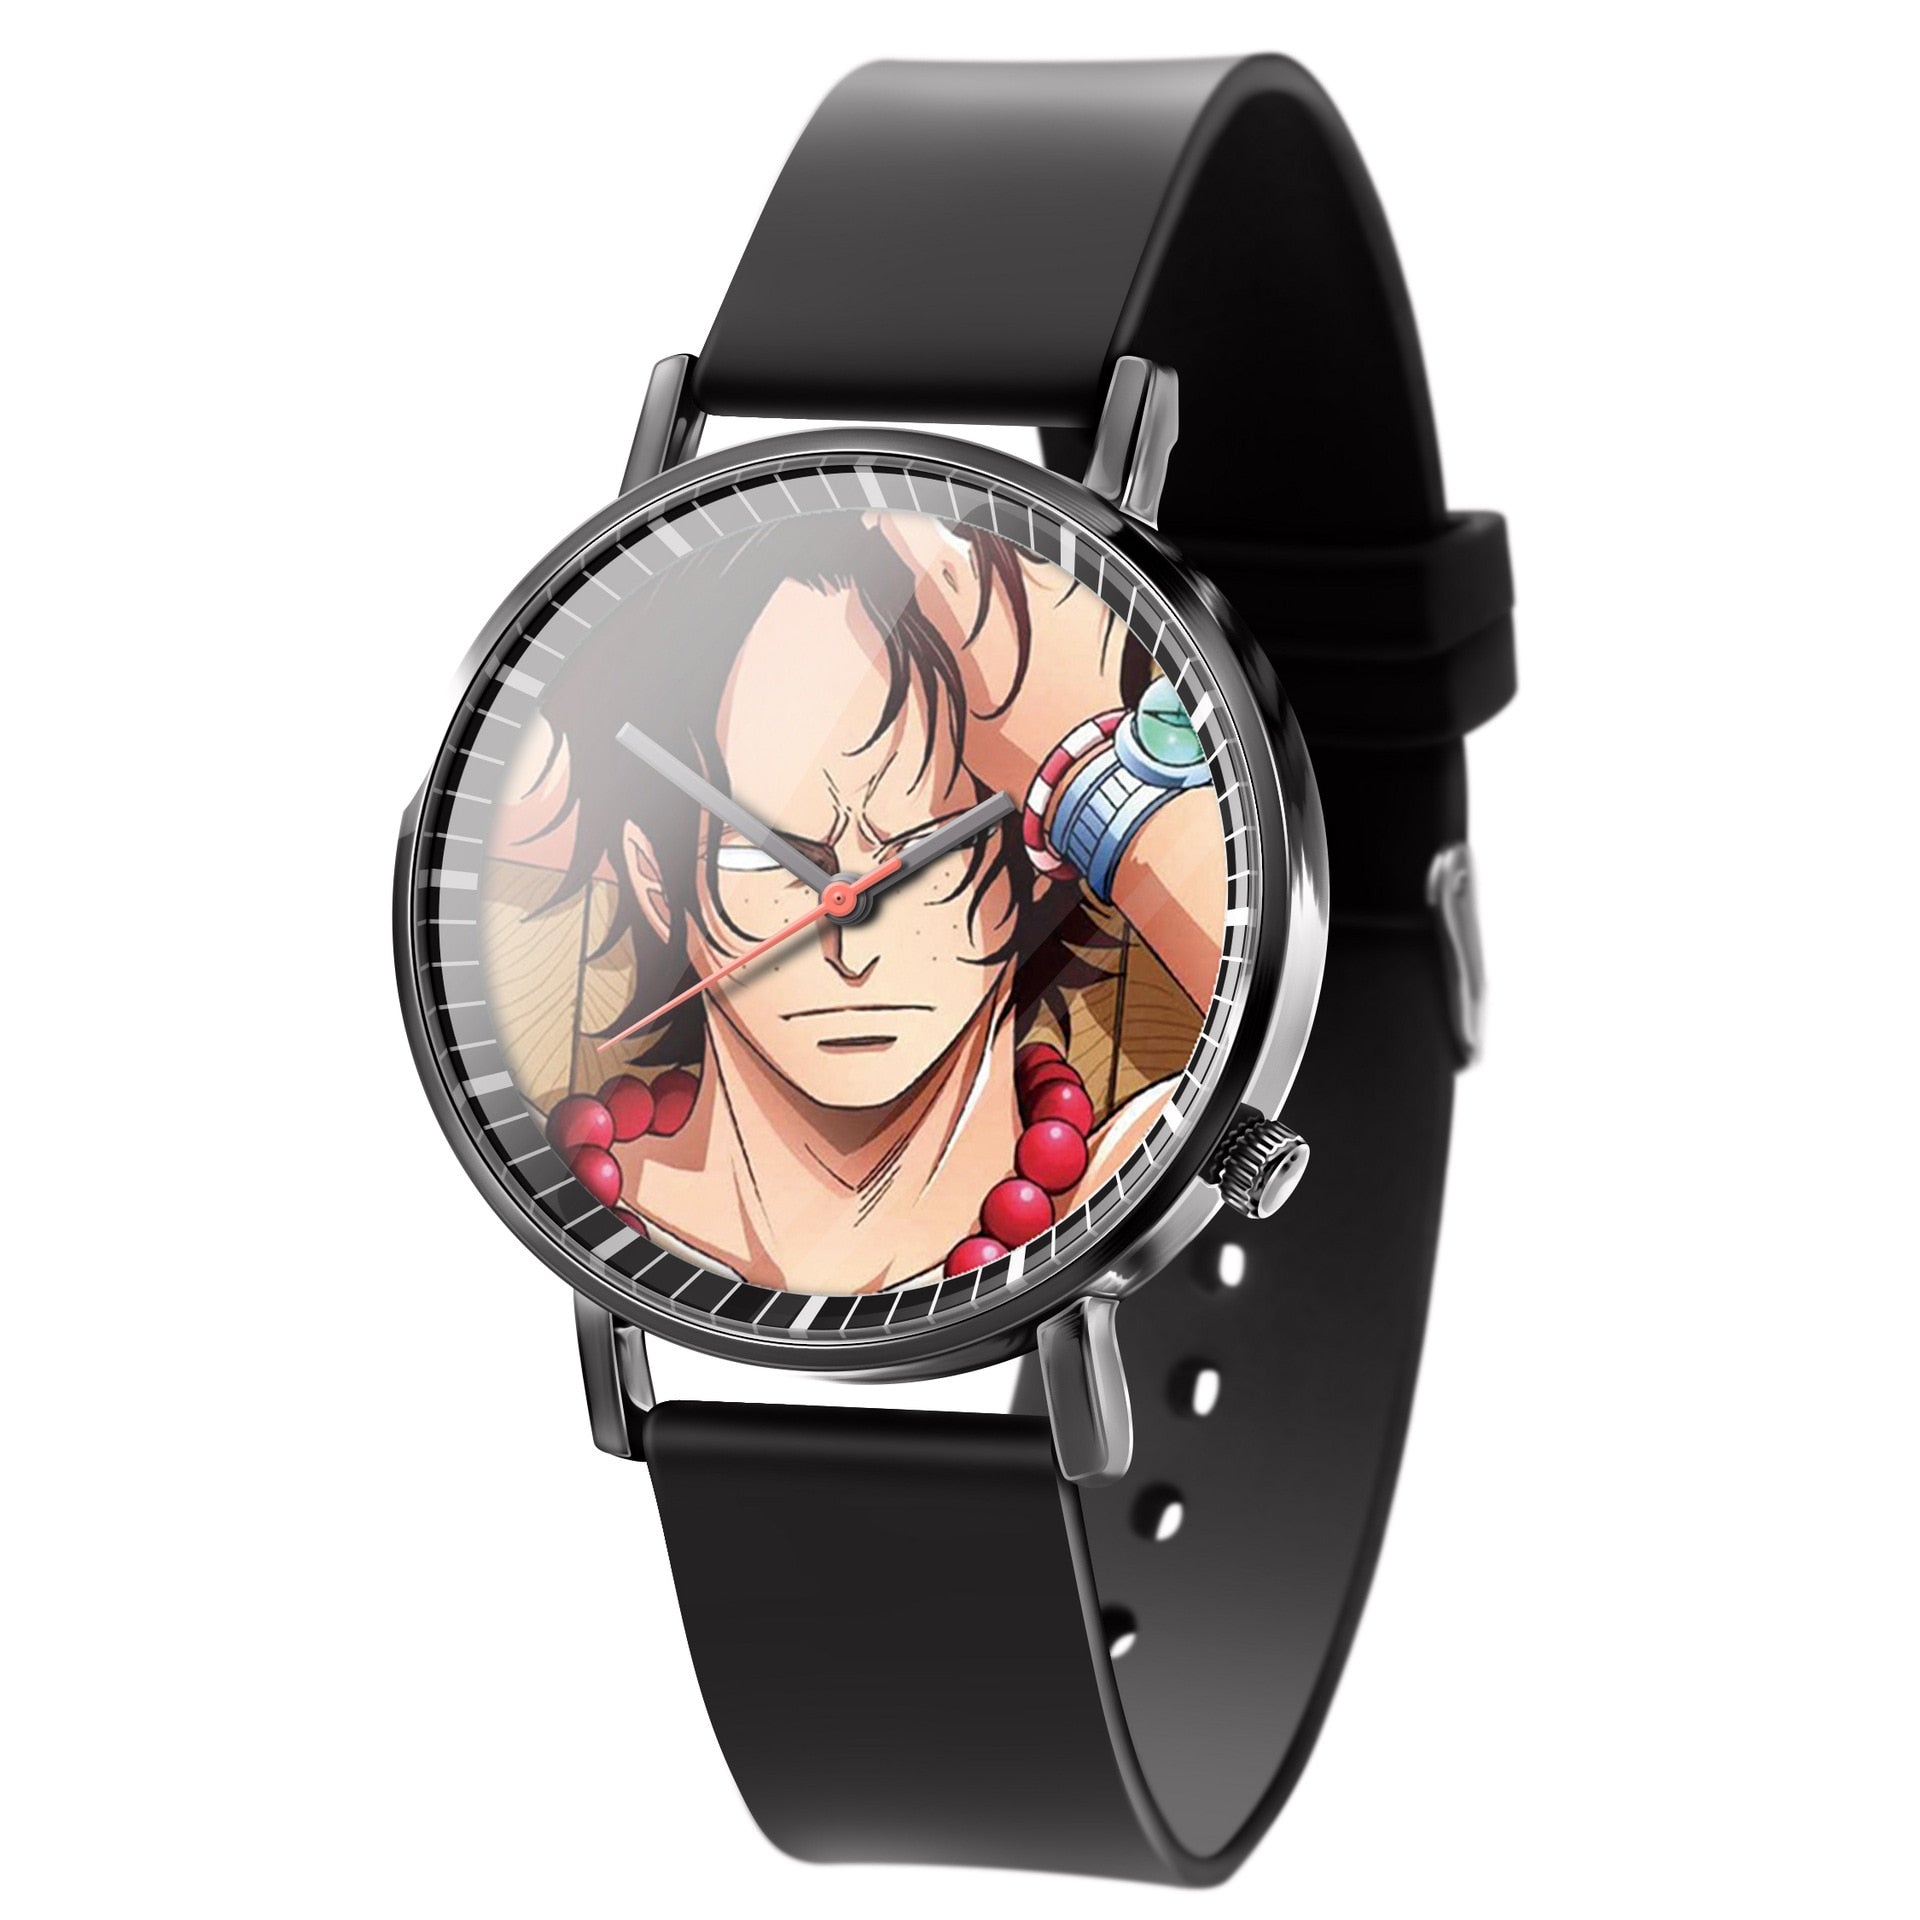 Buy Men's G Shock Watch Ga110 x one piece (SW233)